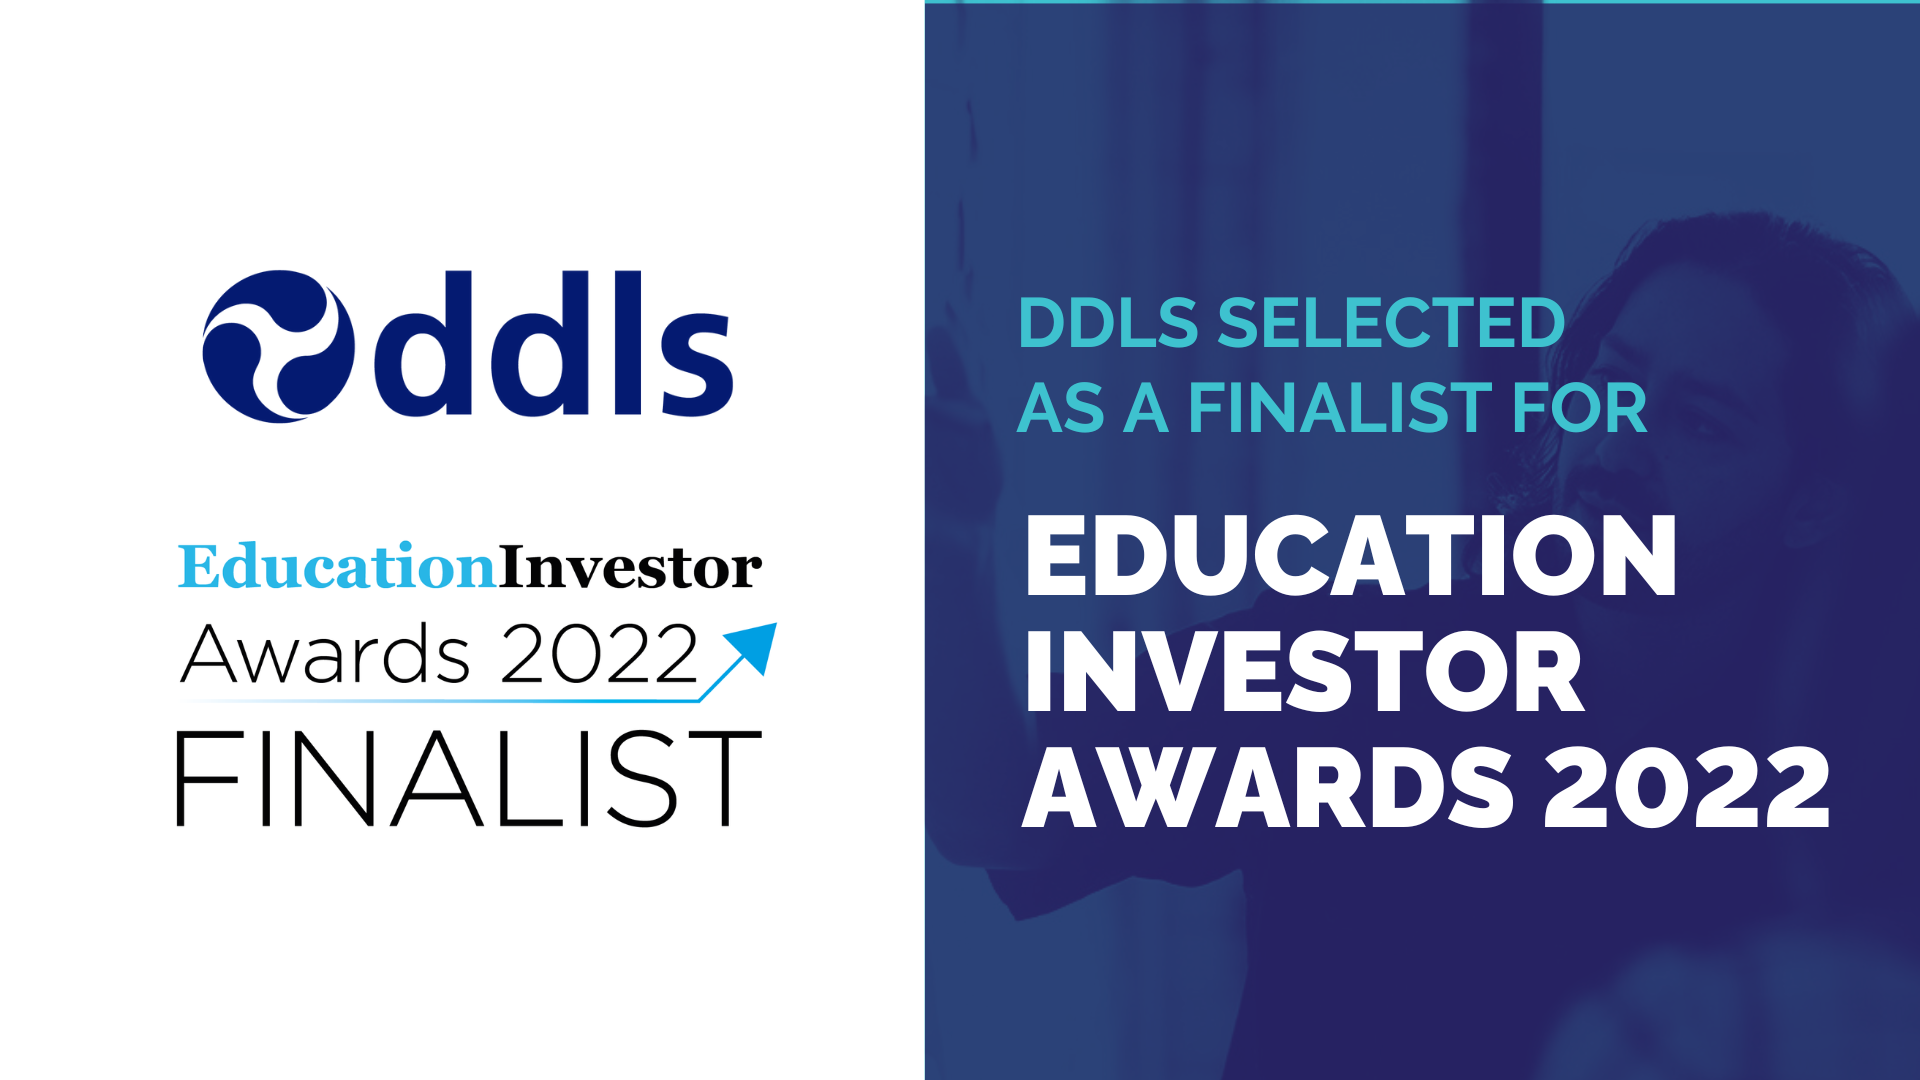 DDLS - DDLS selected as a finalist for EducationInvestor Awards 2022 - Award Blog Image 1920 x 1080